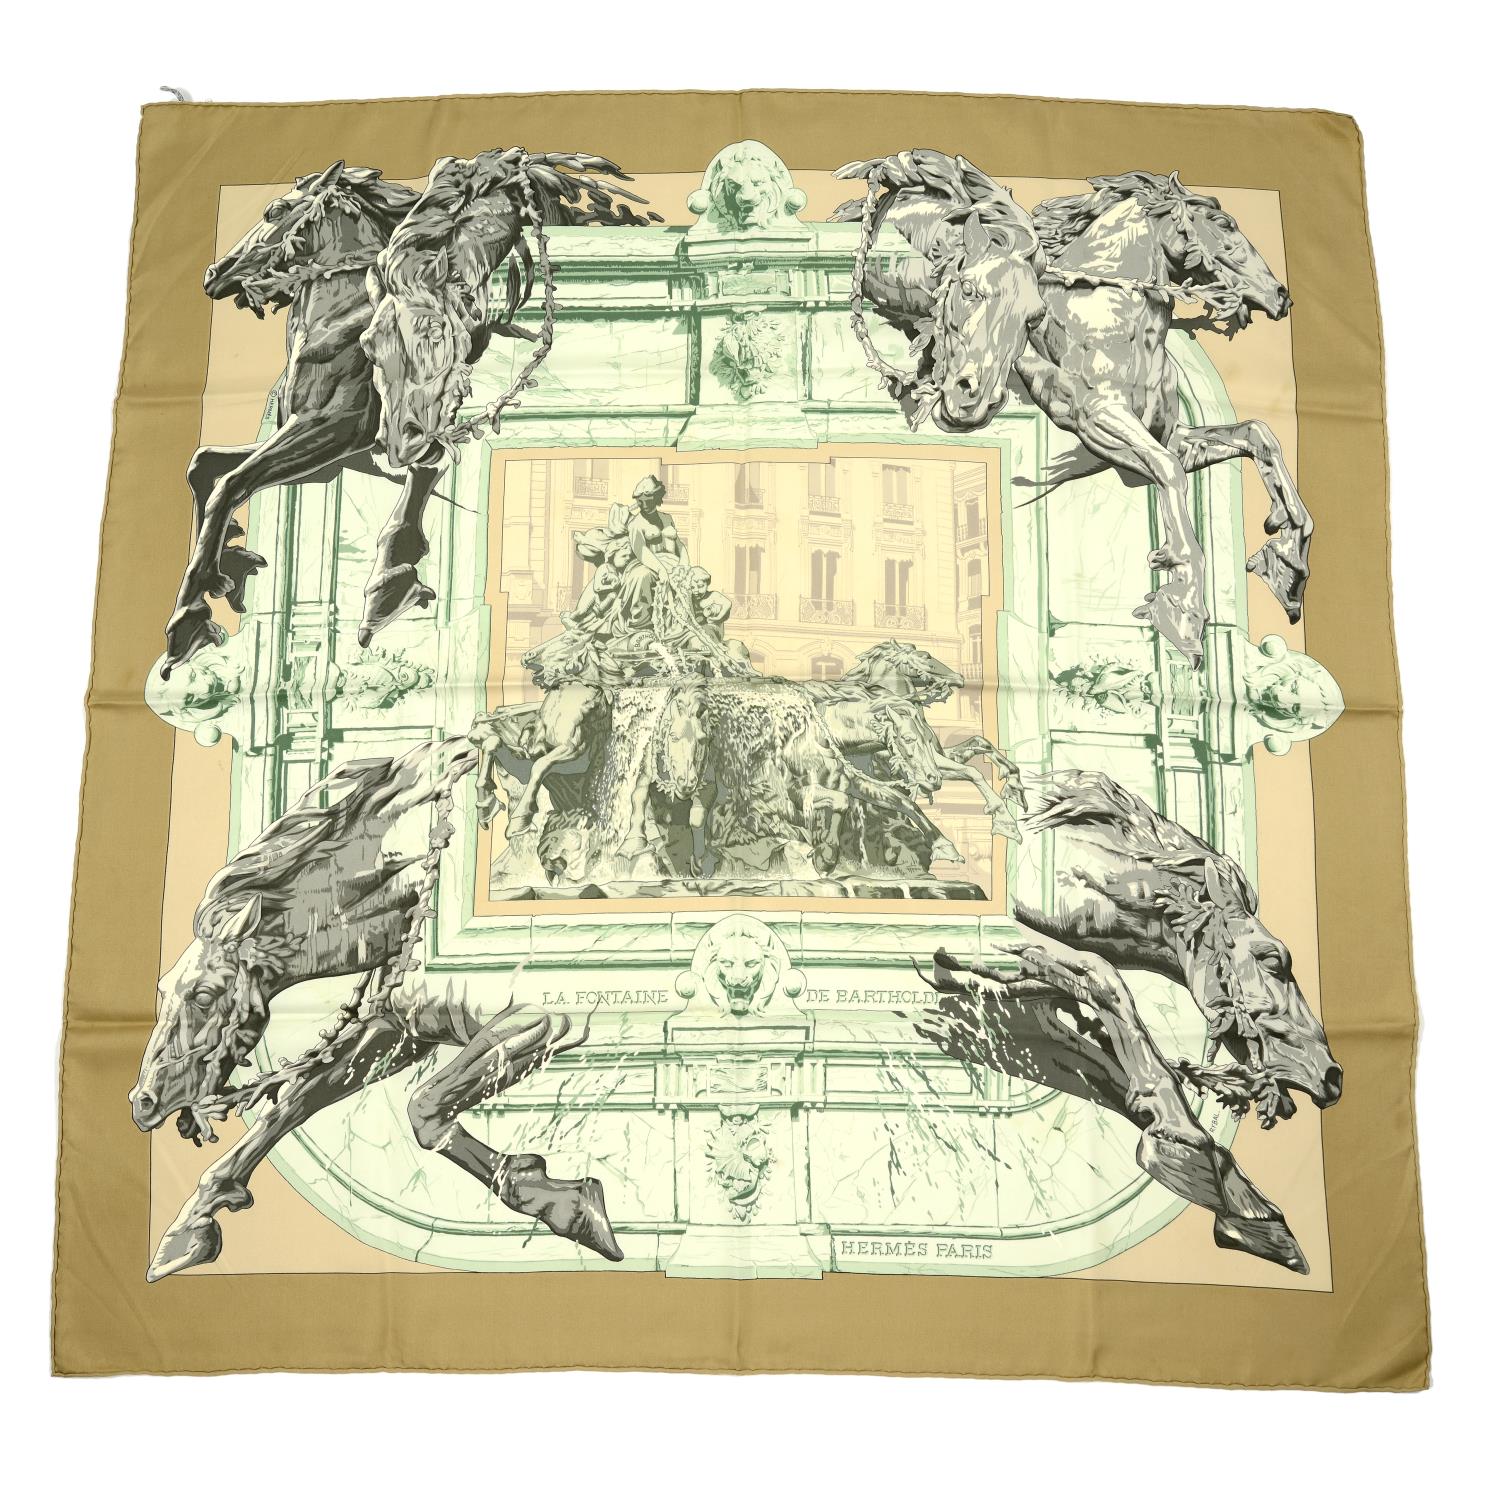 HERMÈS - a 'la Fontaine de Bartholdi' silk scarf.